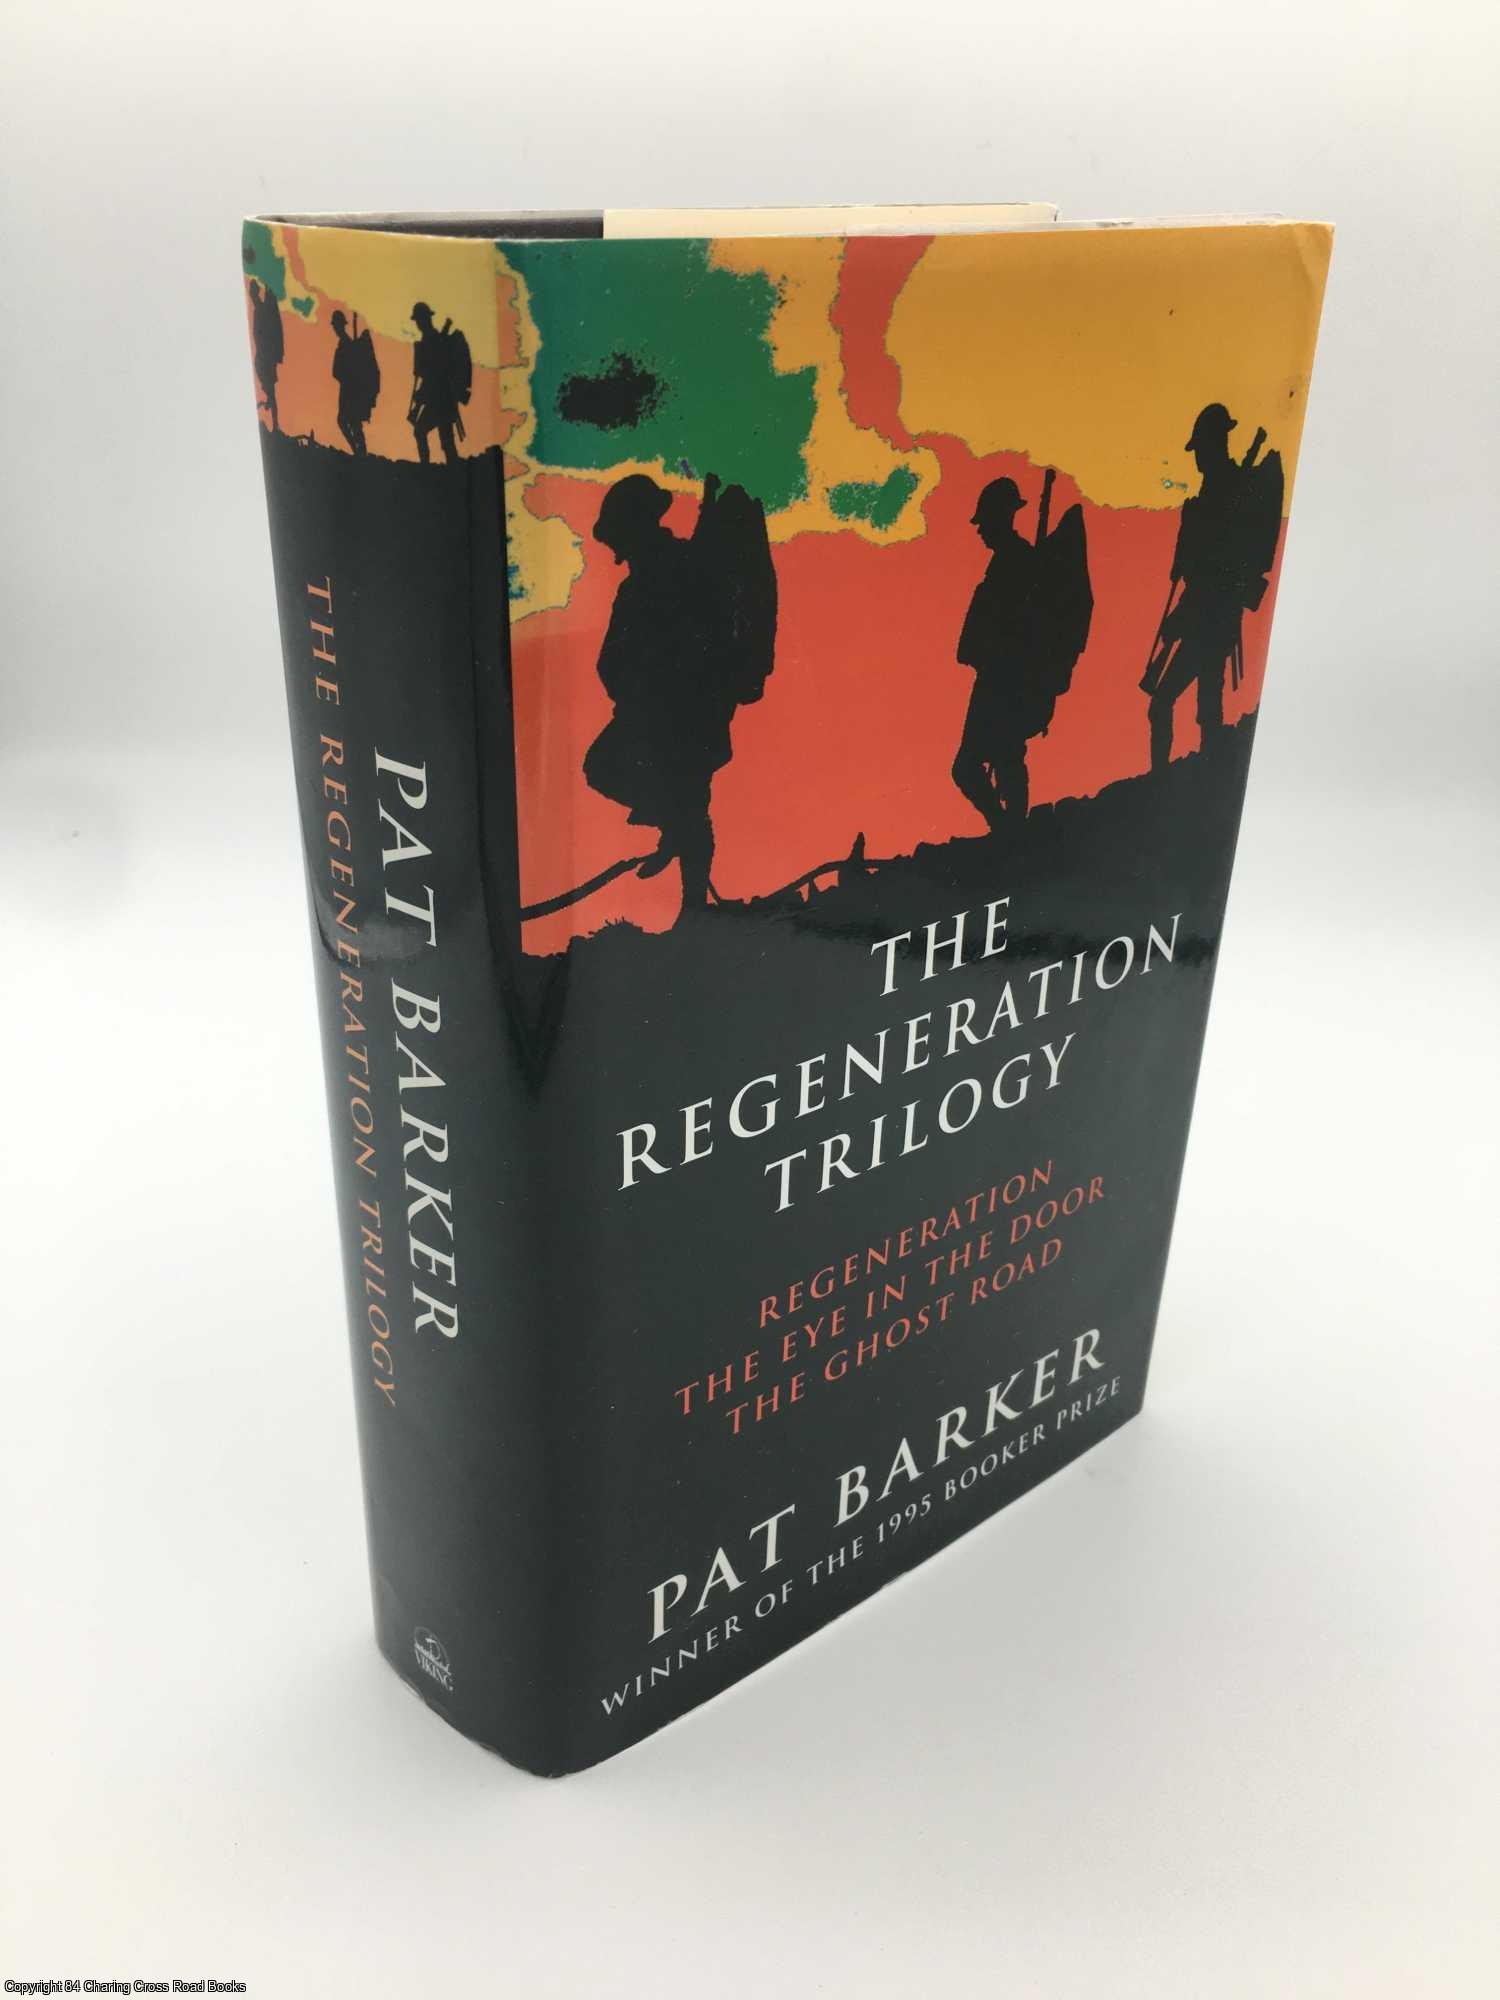 Barker, Pat - The Regeneration Trilogy: Regeneration; The Eye in the Door; The Ghost Road